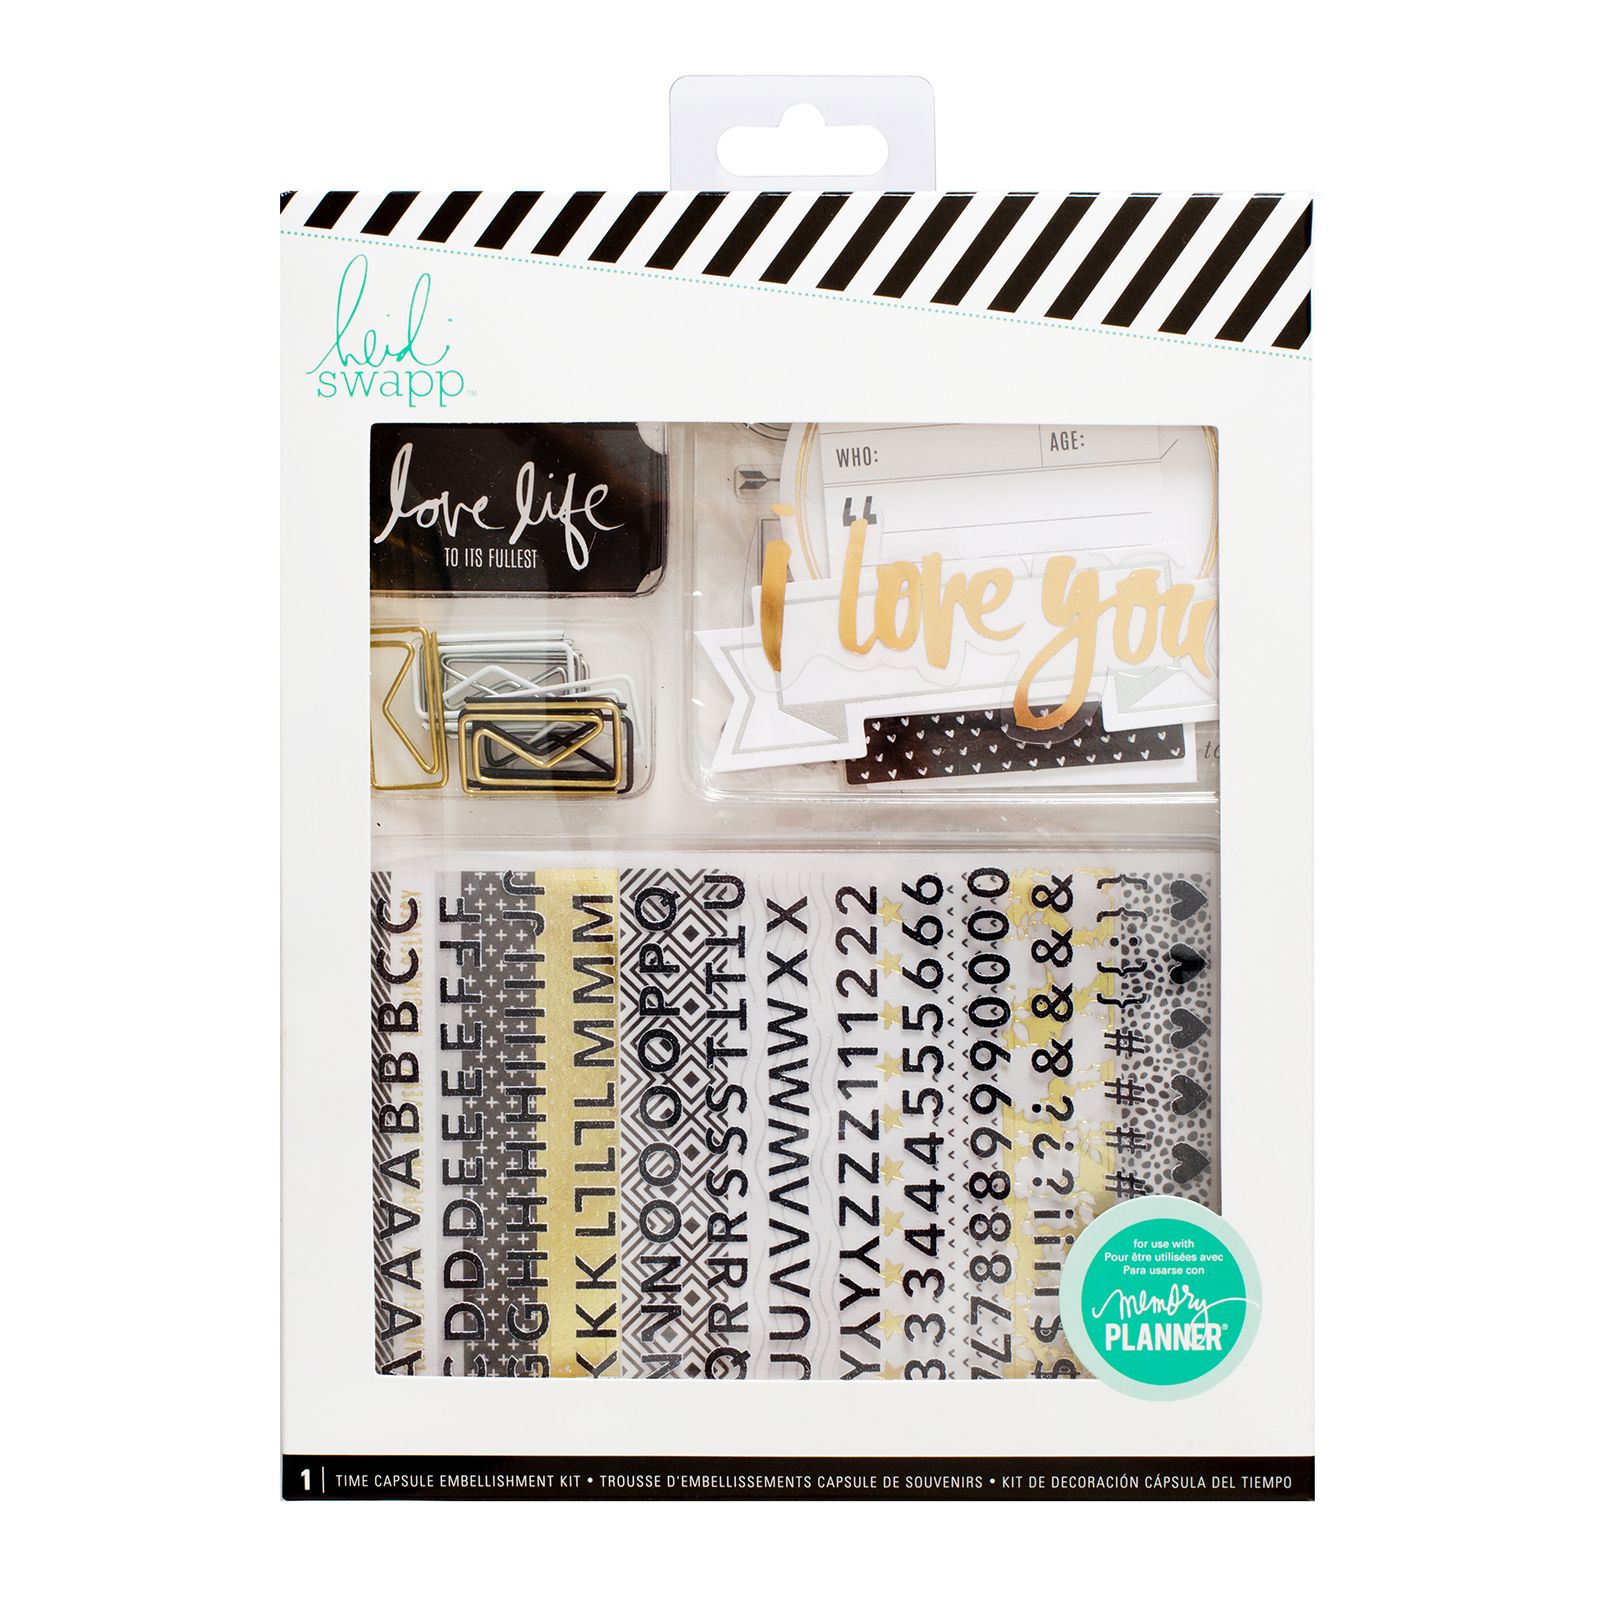 Heidi Swapp • Time capsule embellishment kit 